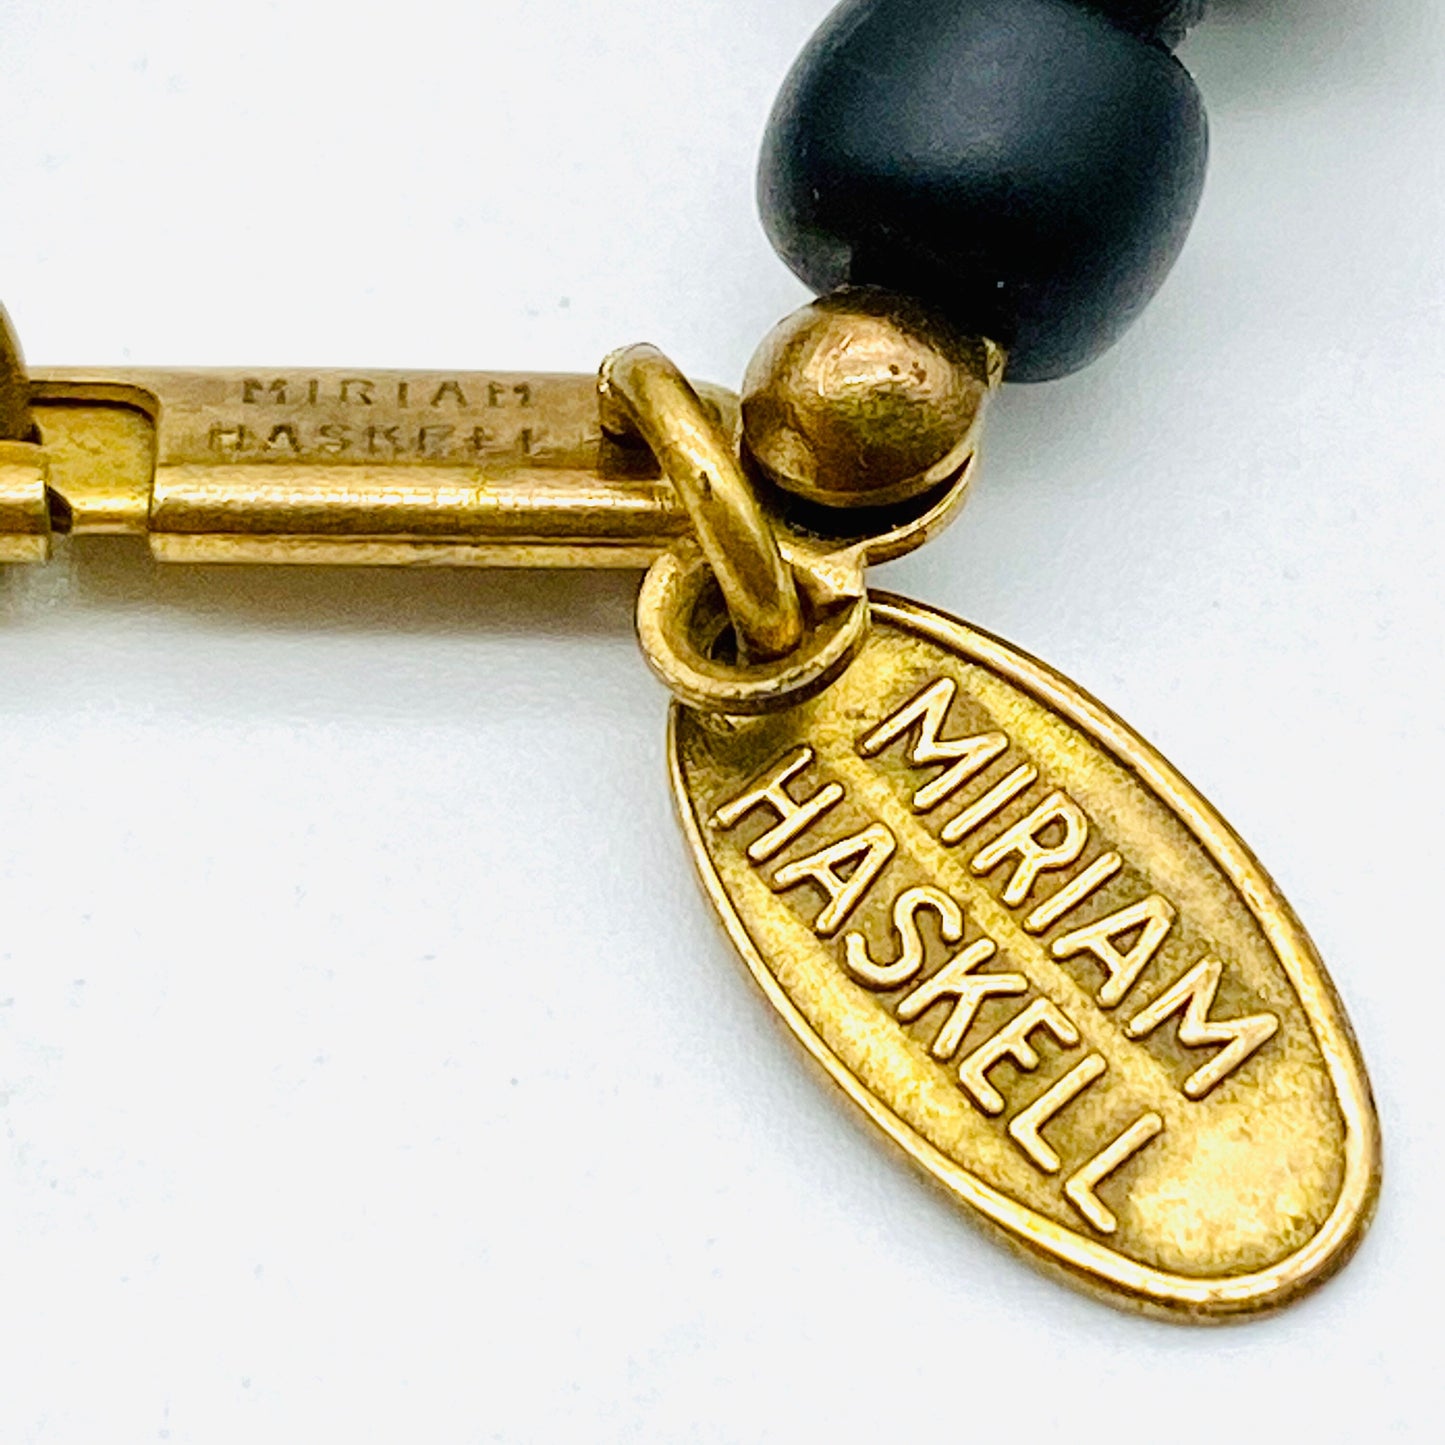 Collier de perles en bois Miriam Haskell